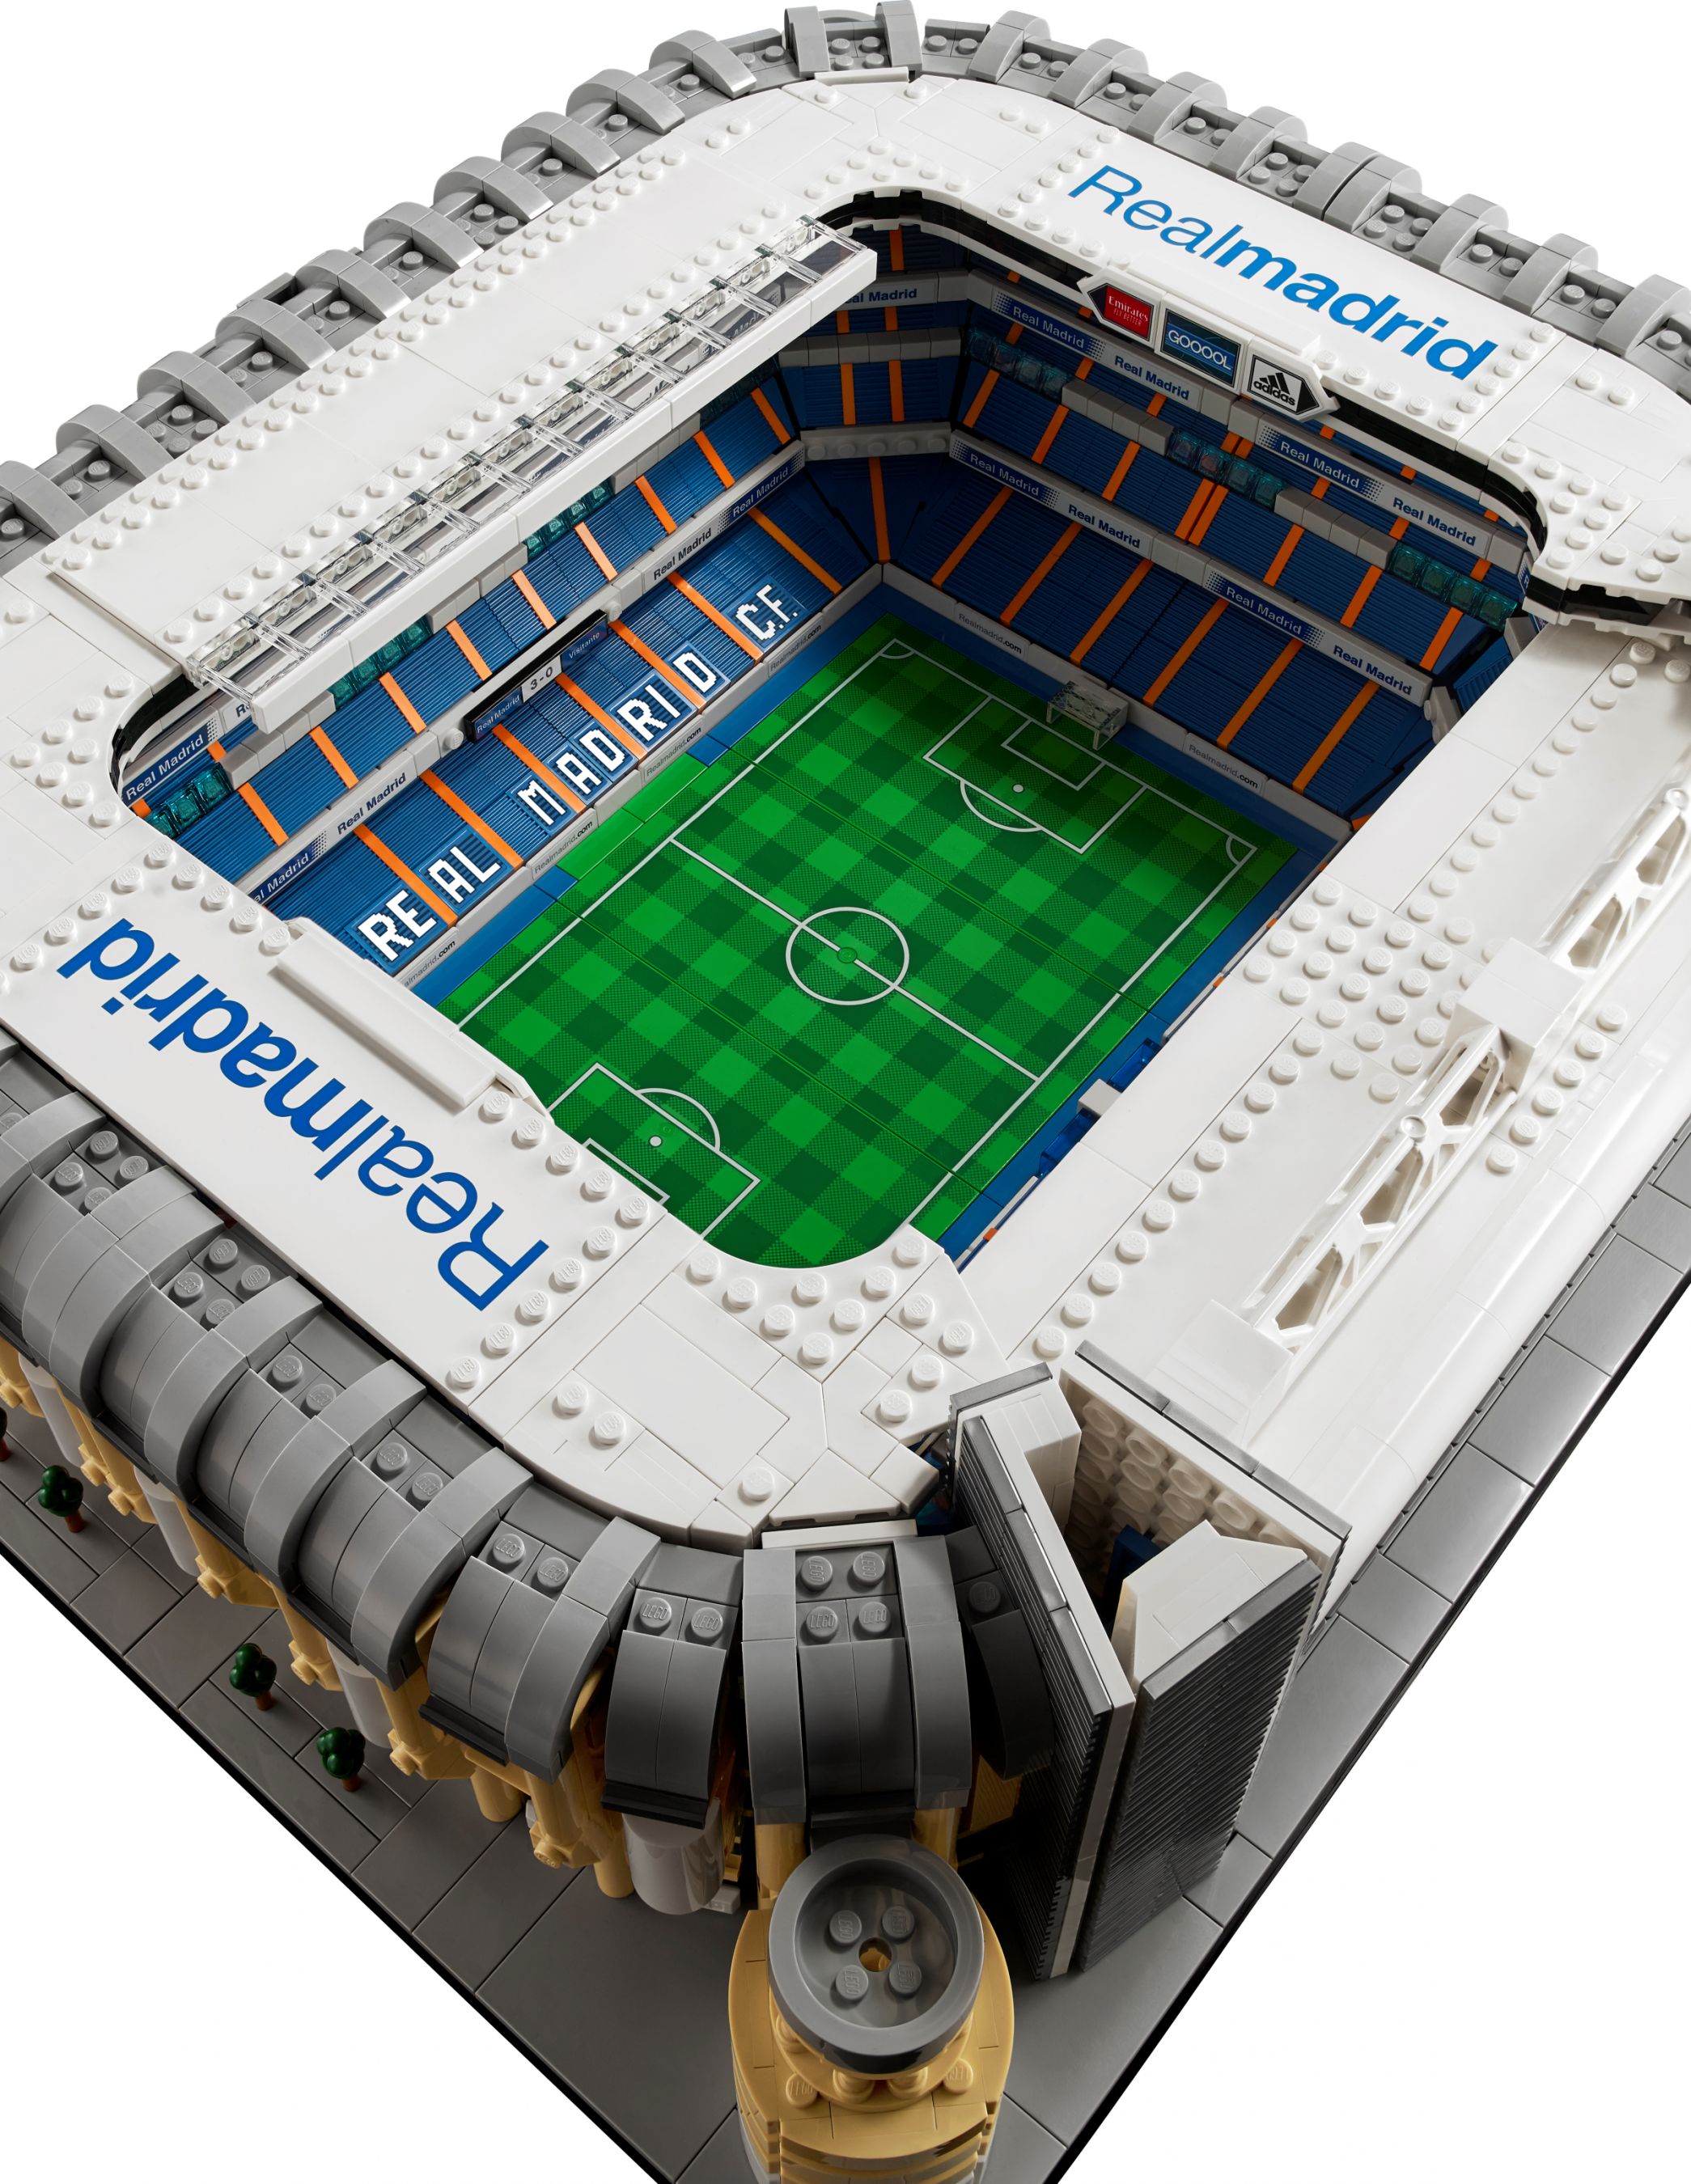 LEGO Advanced Models 10299 Real Madrid - Santiago Bernabéu Stadion LEGO_10299_alt3.jpg